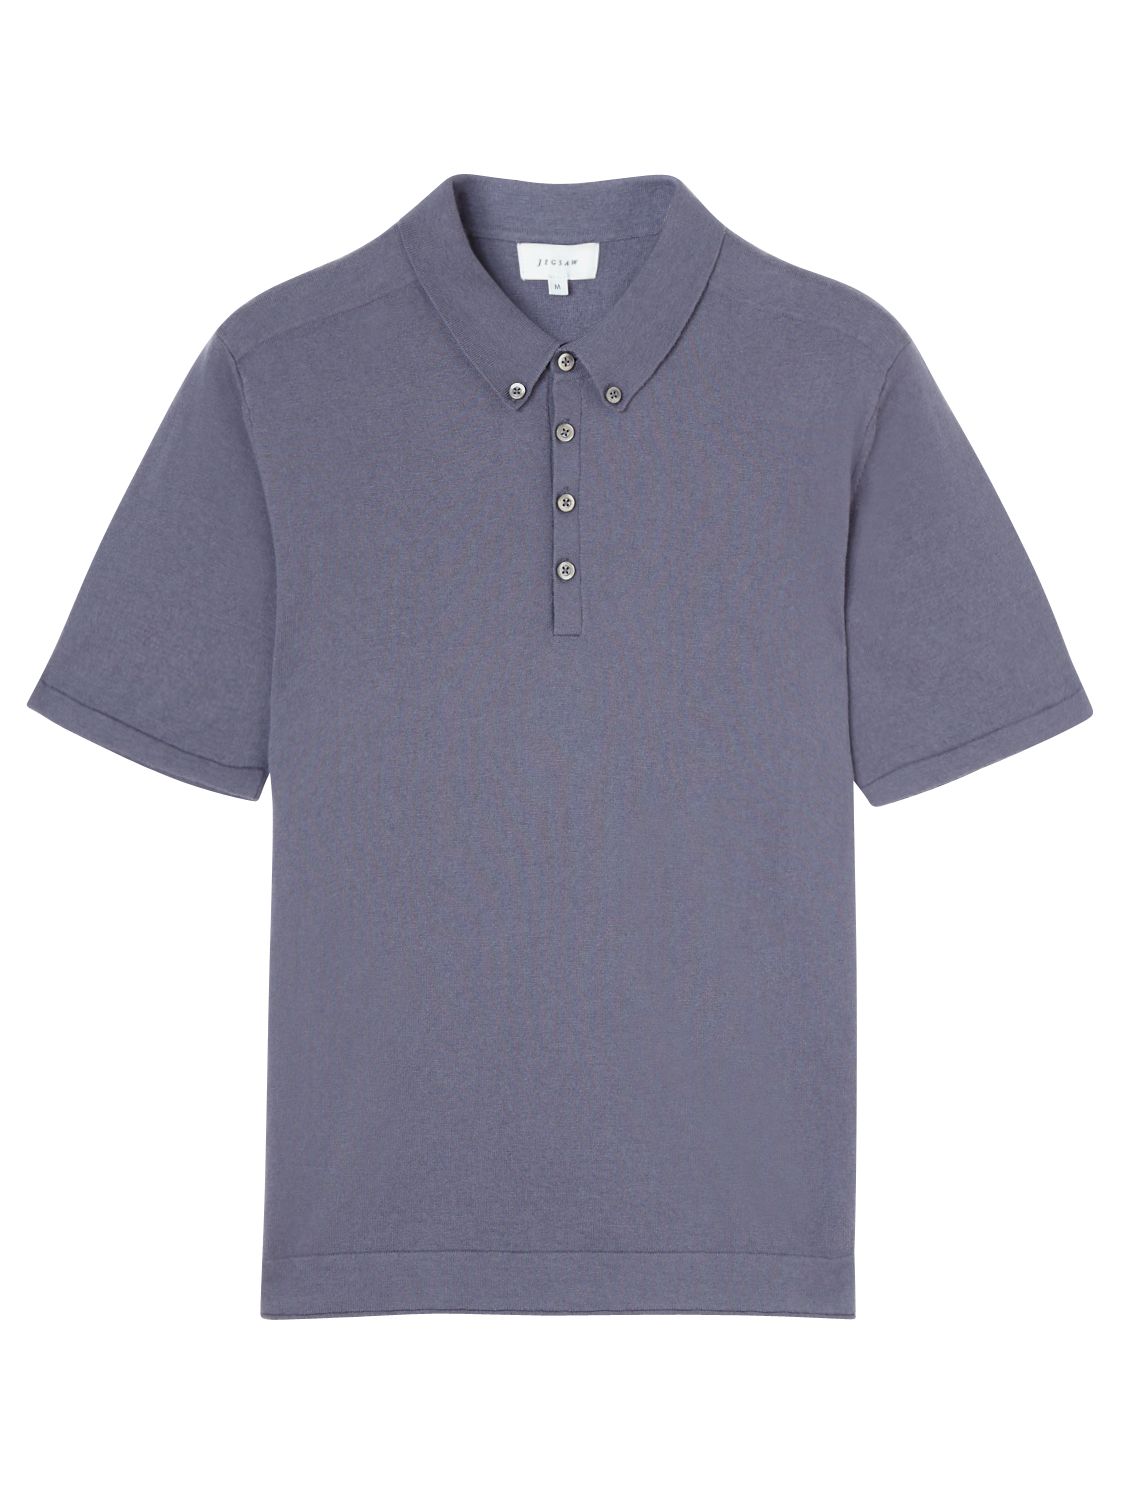 Jigsaw Cotton Cashmere Knit Polo Shirt, Slate, XL